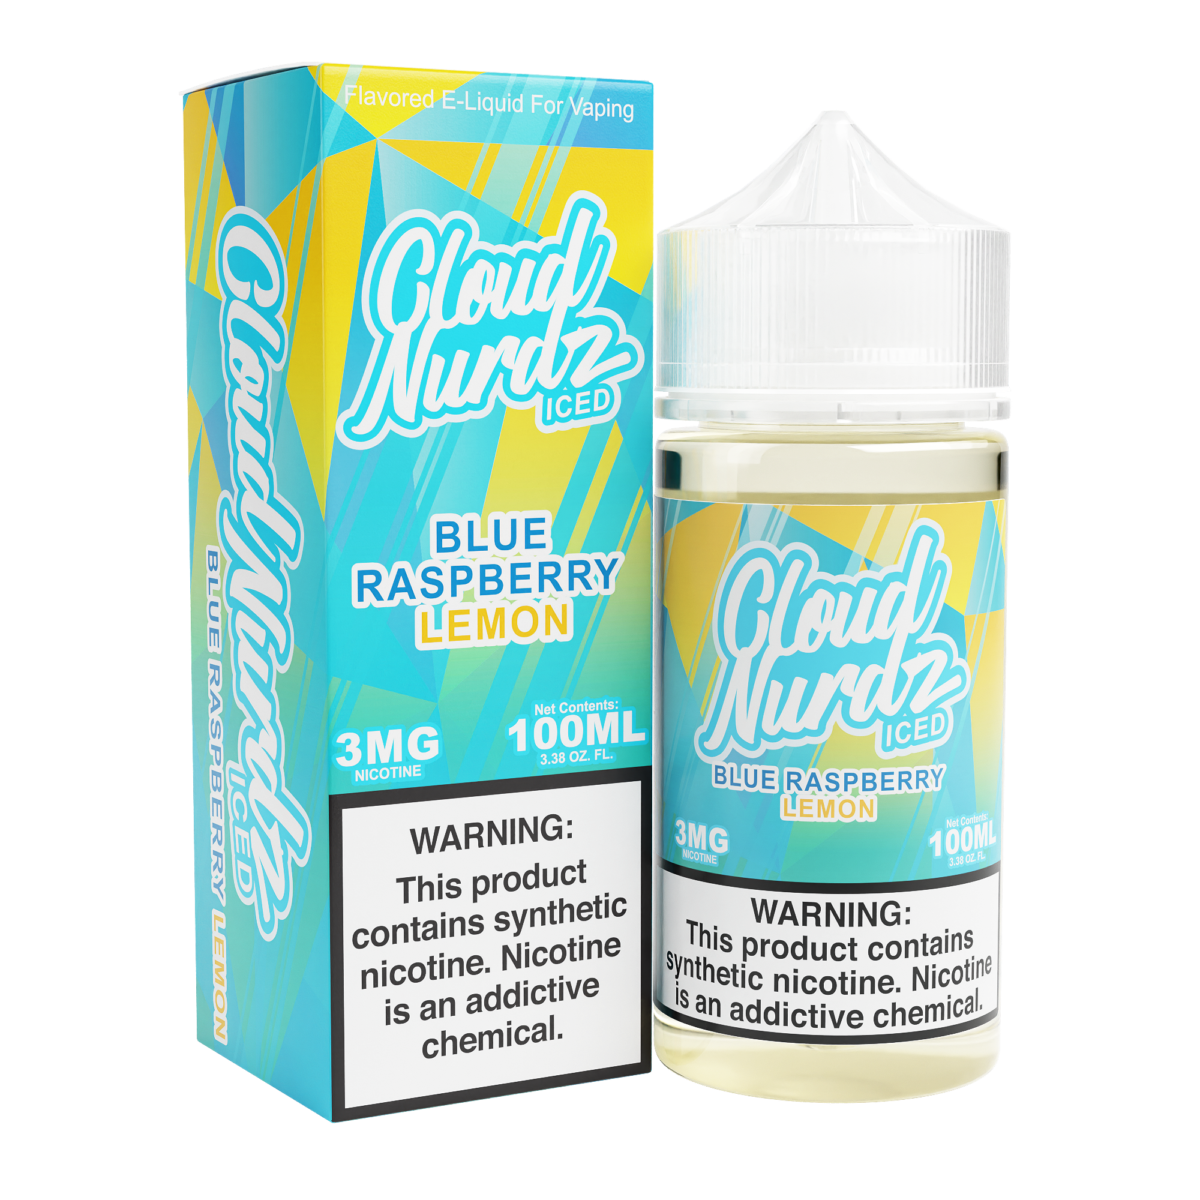 Cloud Nurdz Series E-Liquid 100mL Blue Raspberry Lemon Ice with packaging